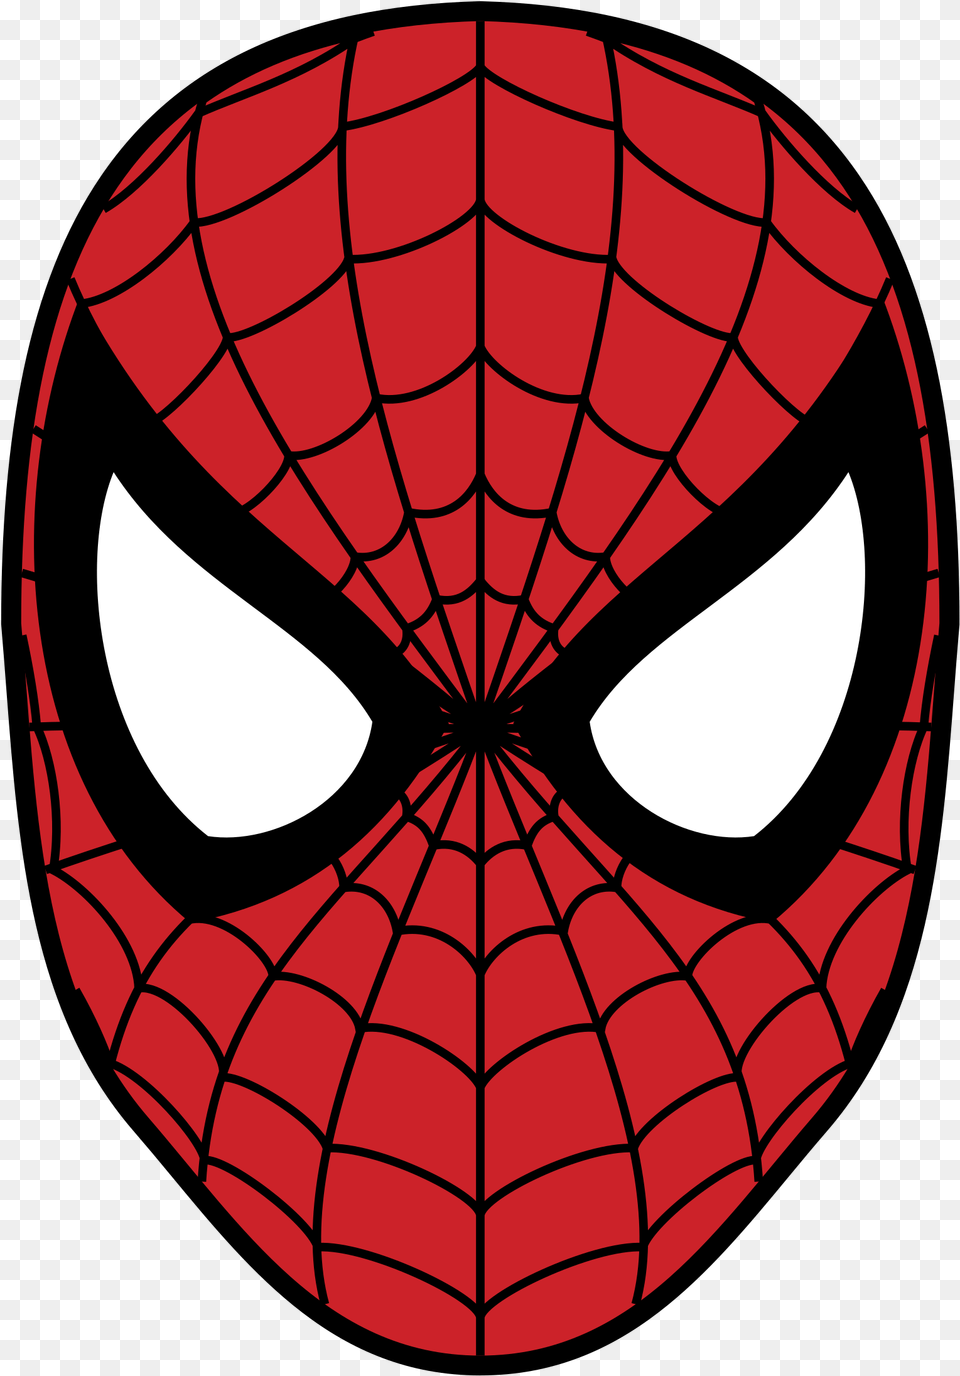 Spider Man Cartoon Face, Mask Png